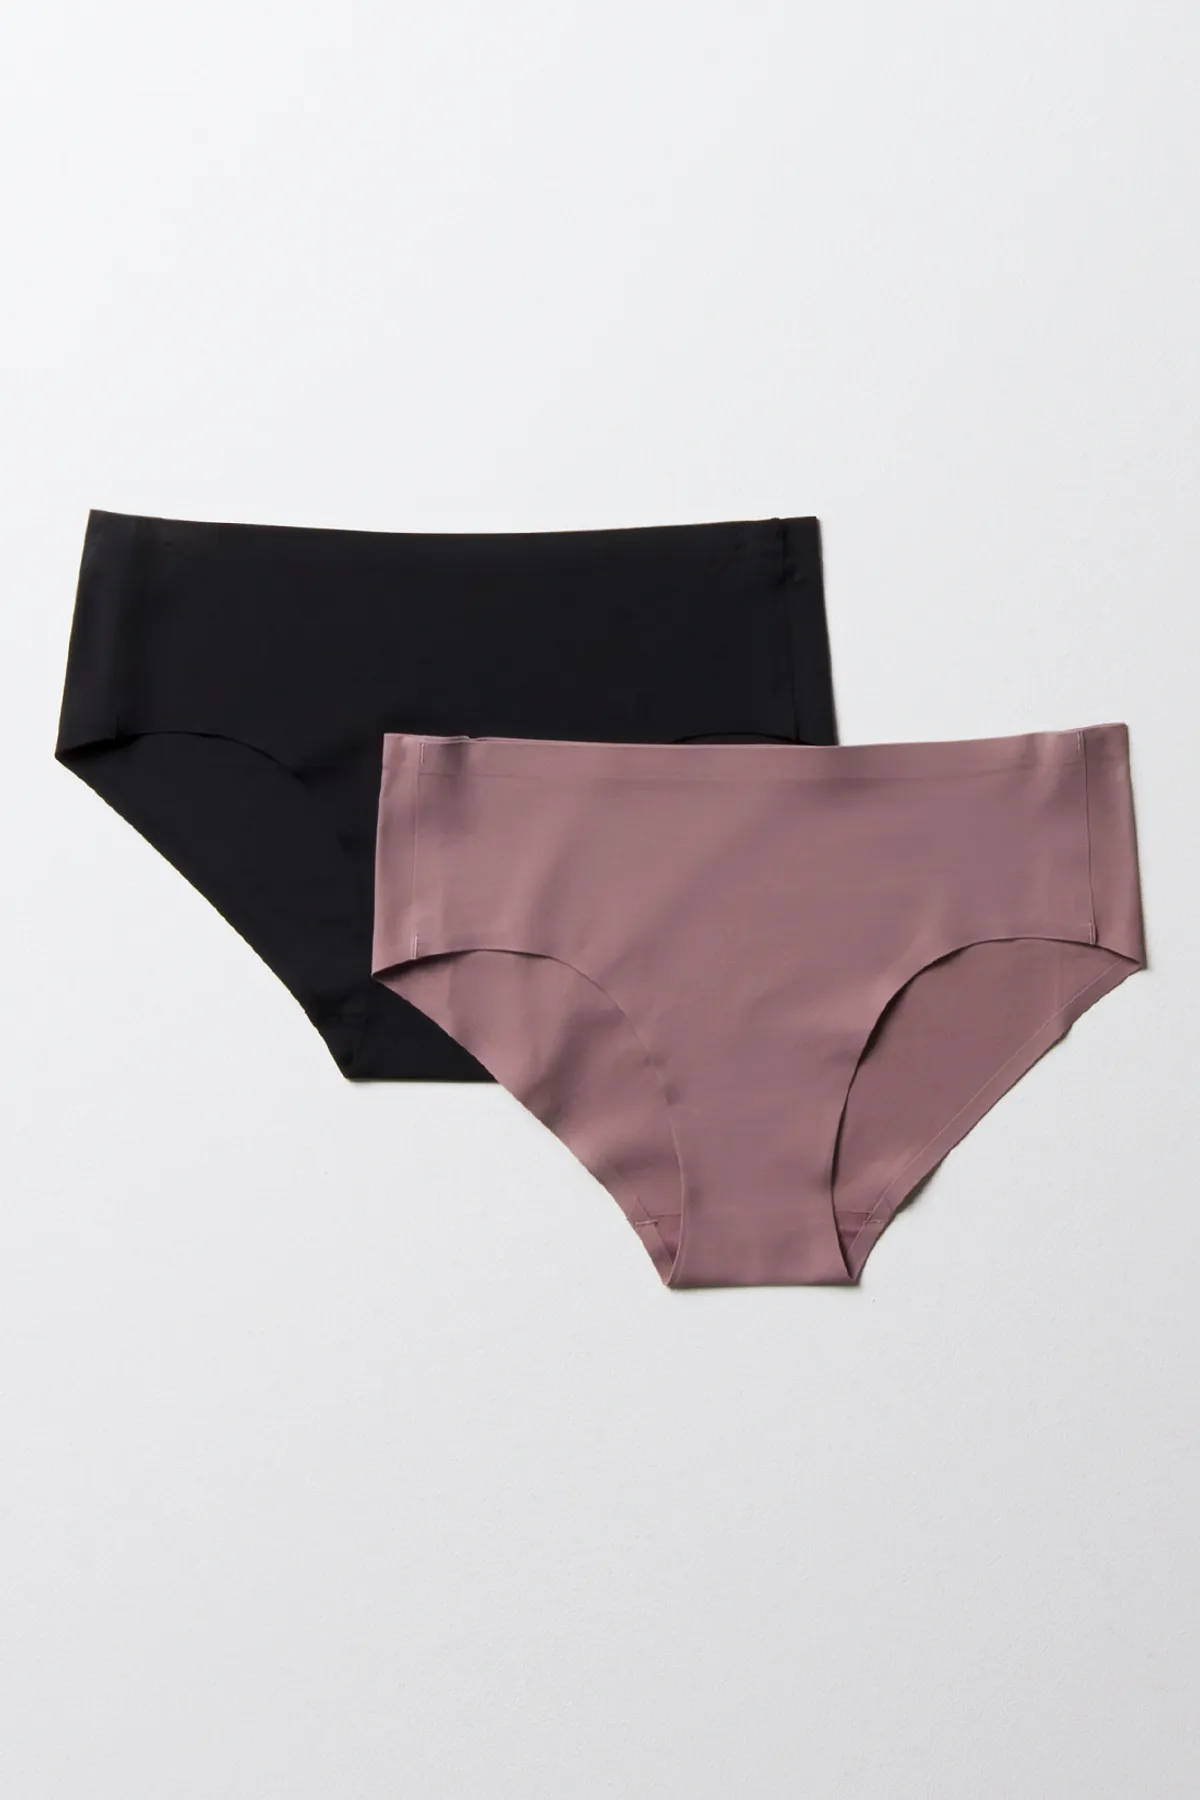 2 Pack bonded boyleg panties black & natural - WOMEN's Panties